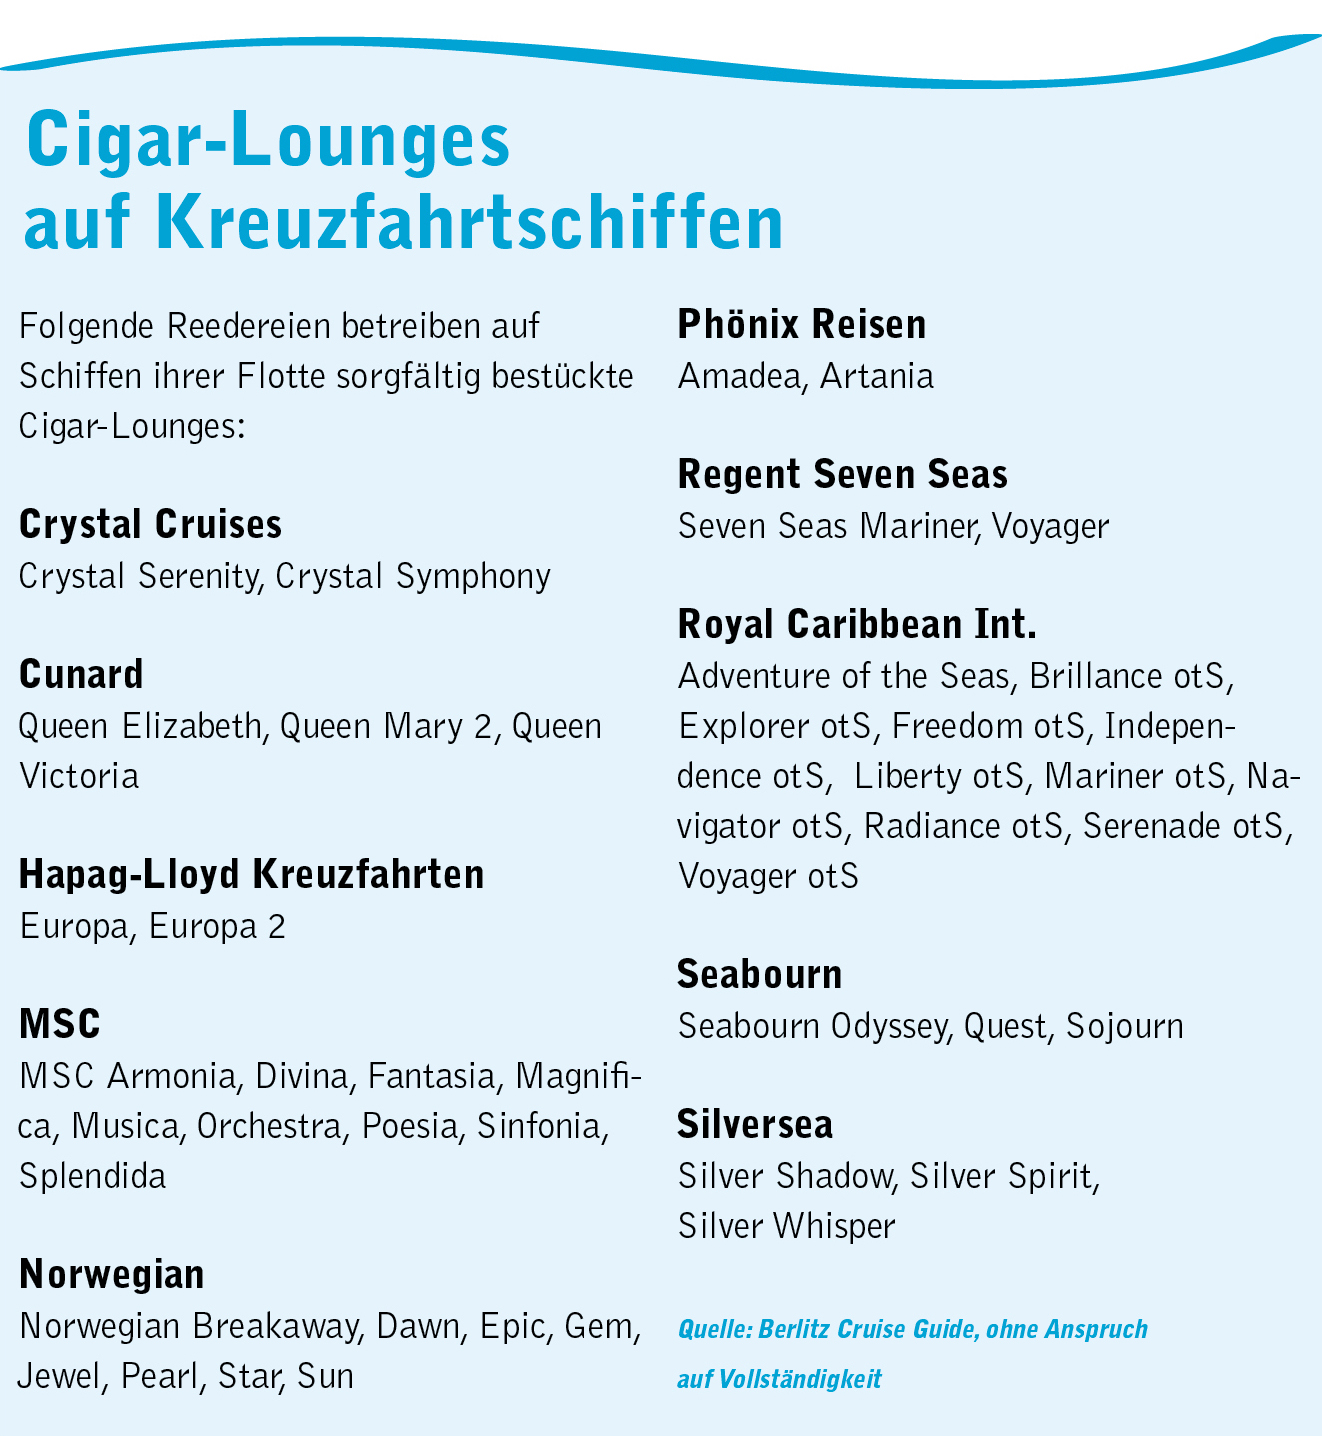 Cigar-Lounges